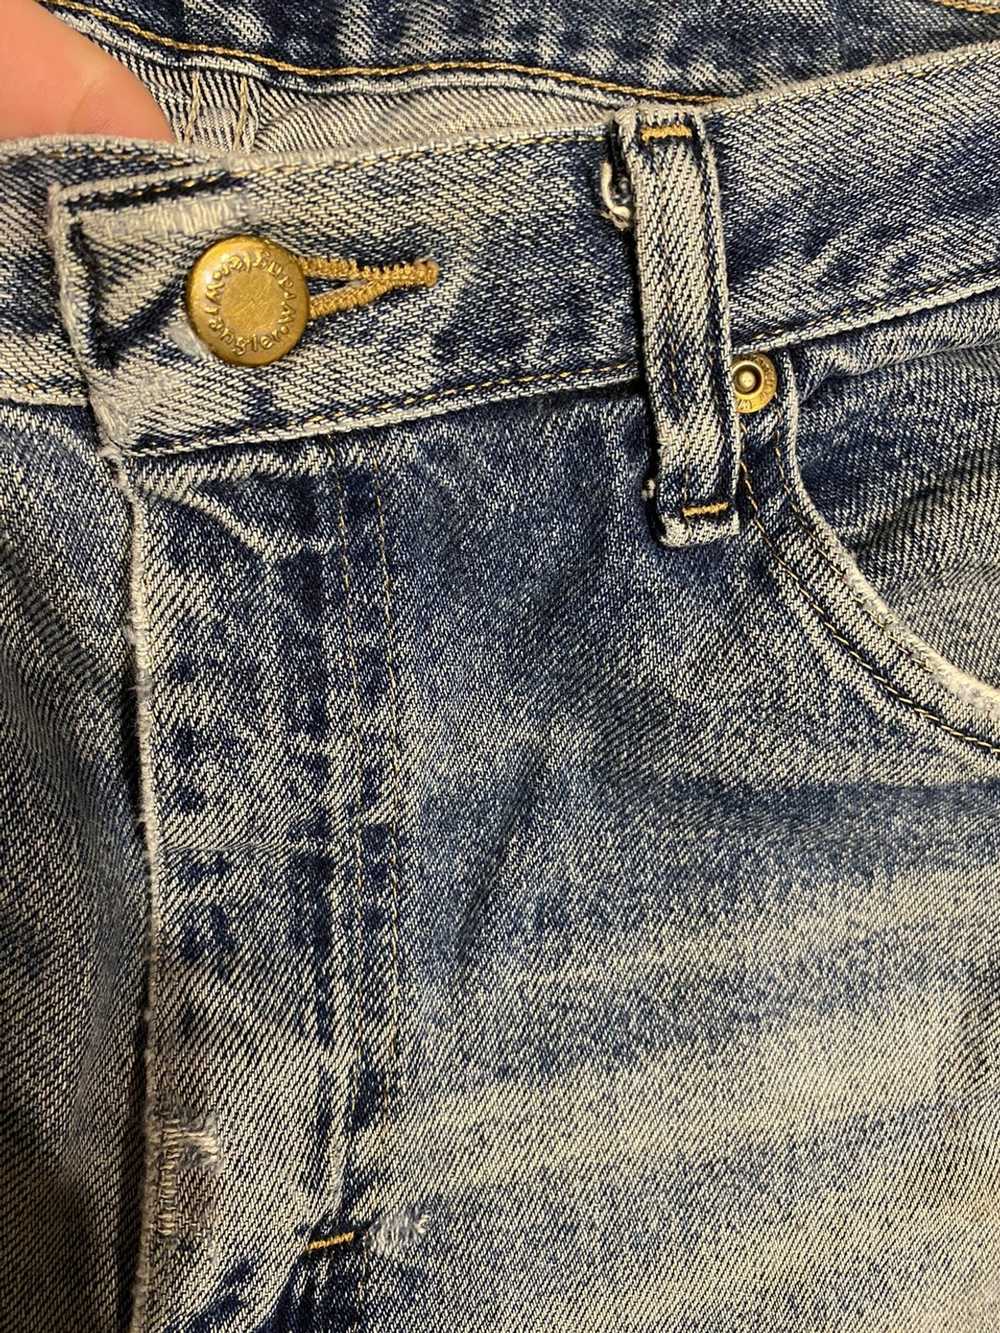 Wrangler Distressed wrangler jeans 34x32 - image 6